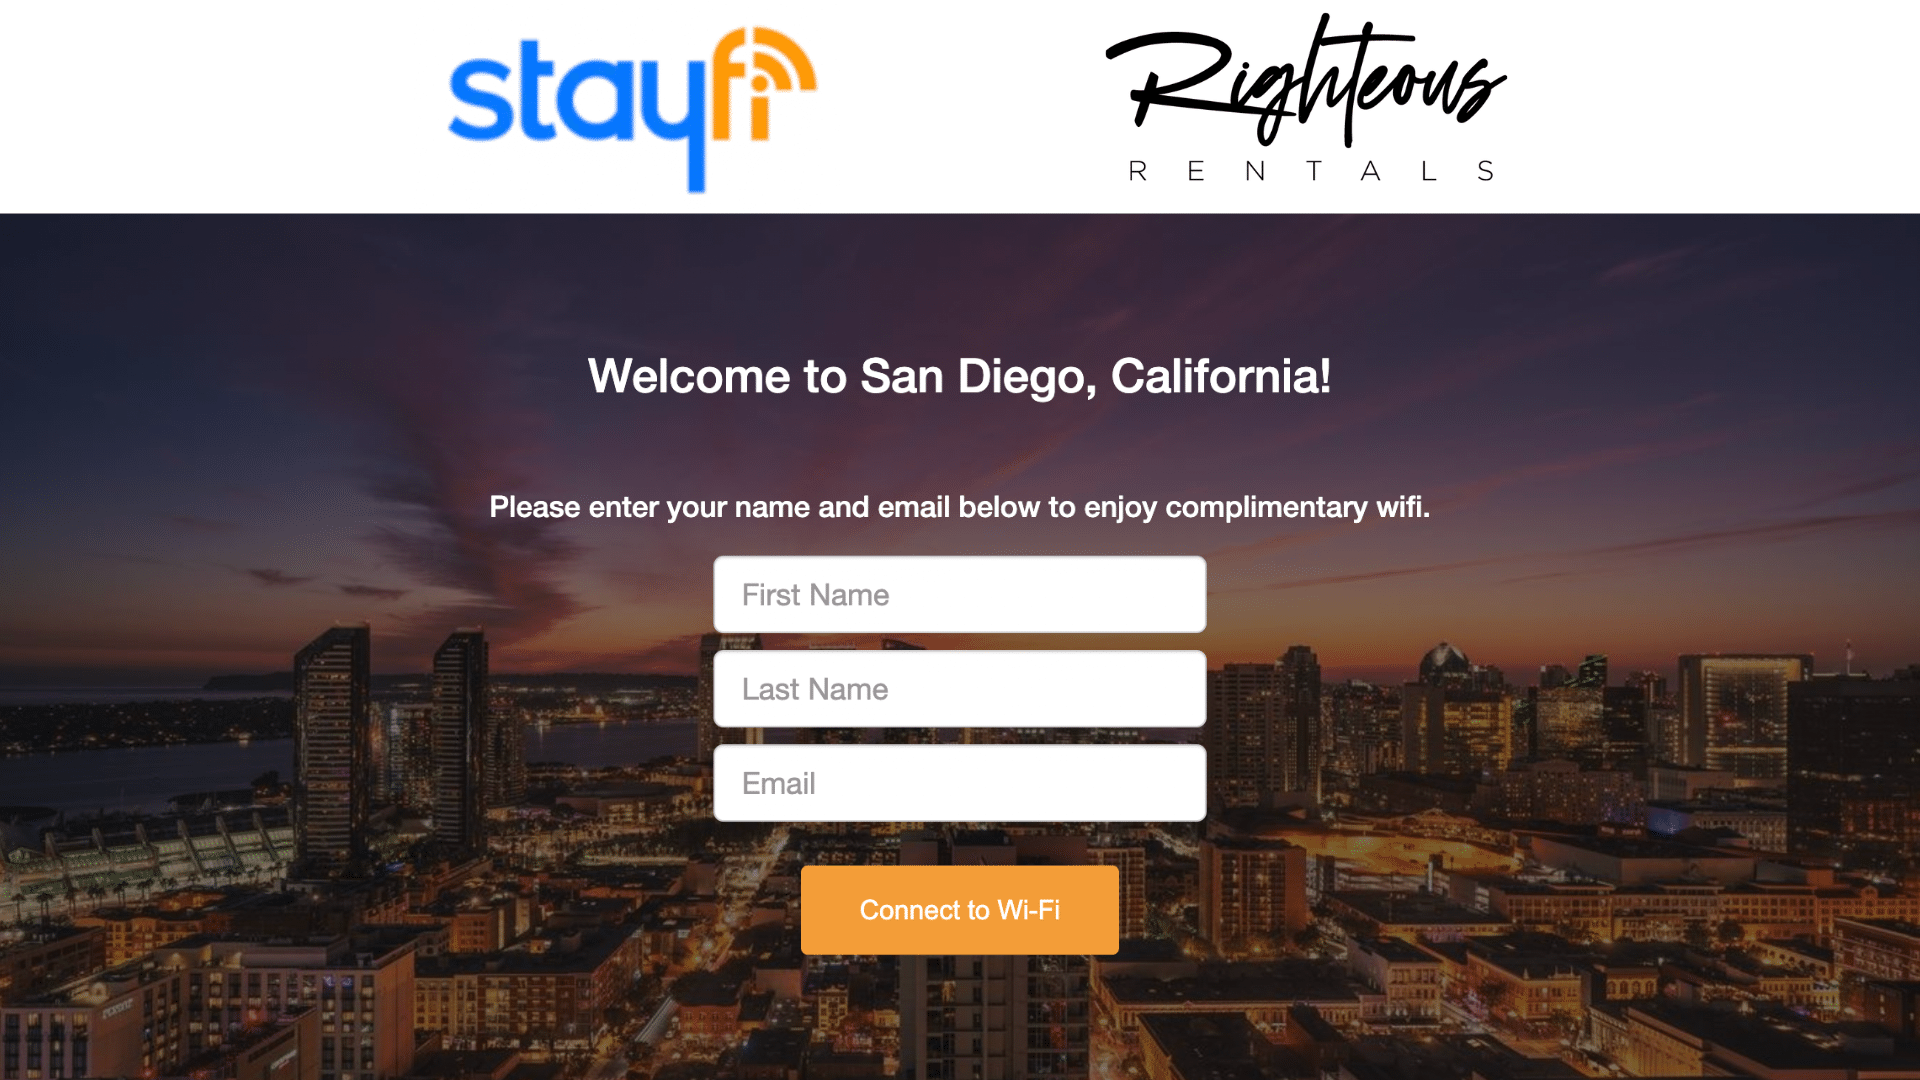 StayFi Customer Spotlight: Righteous Rentals